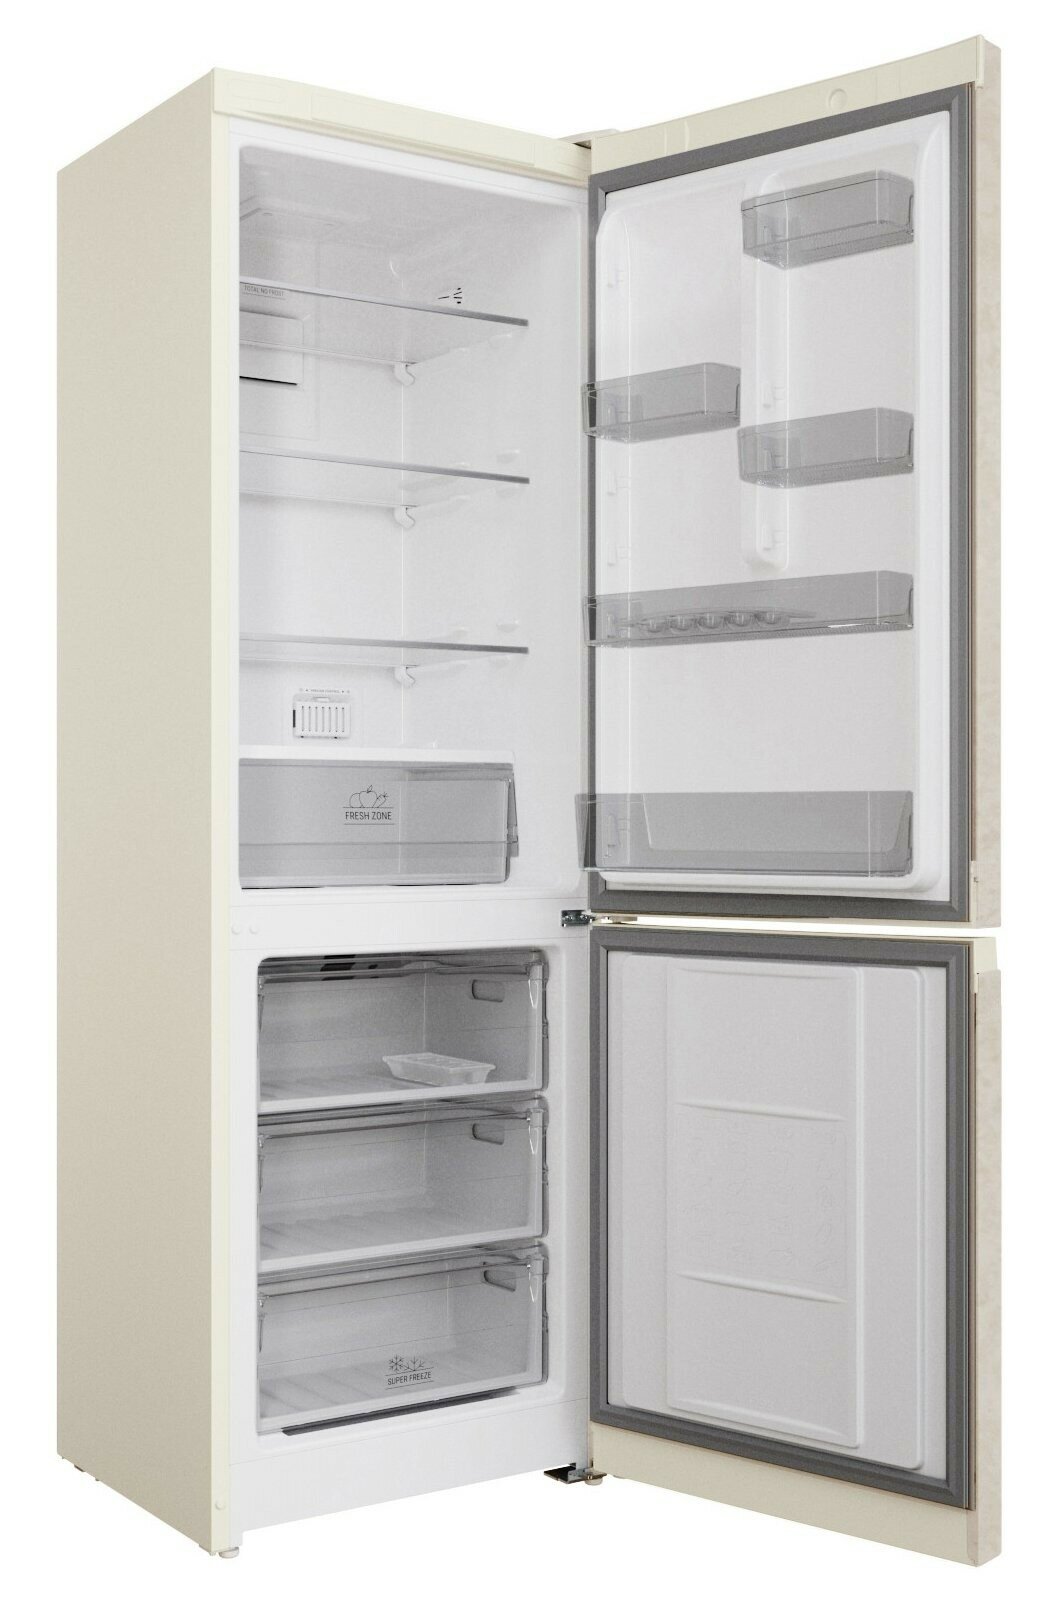 Холодильник Hotpoint HT 5180 AB